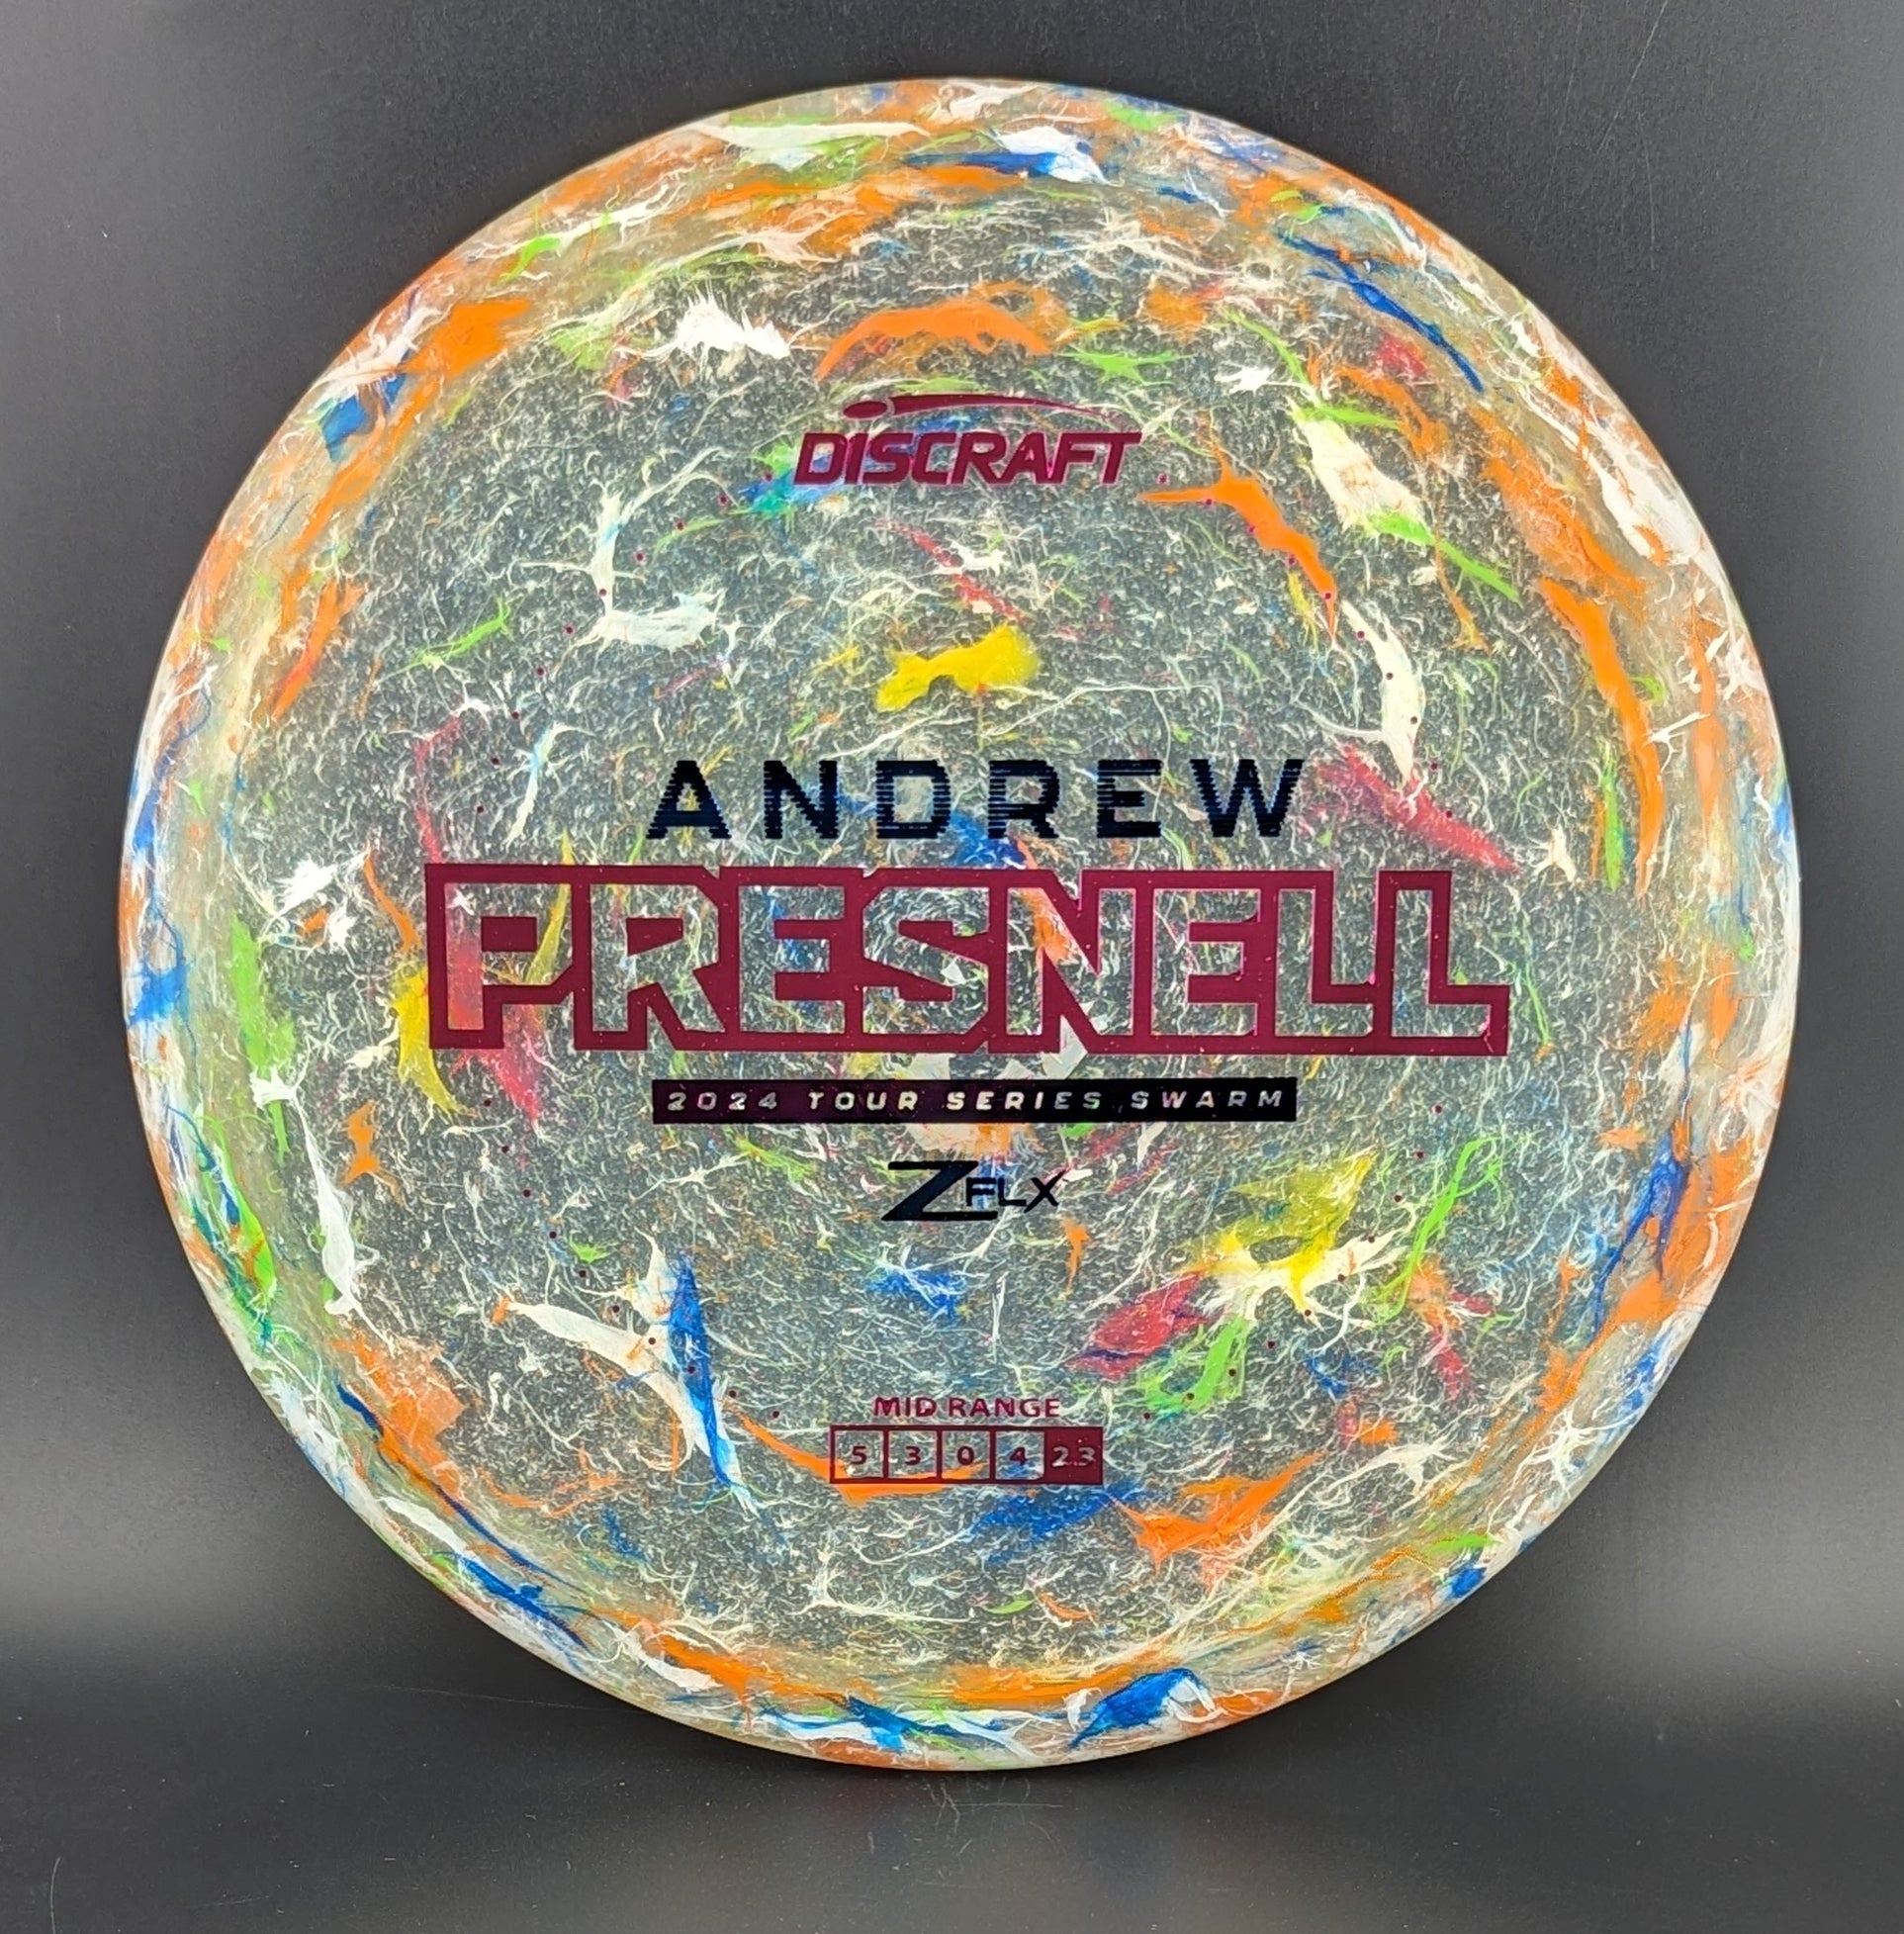 Discraft Andrew Presnell 2024 Tour Series Swarm